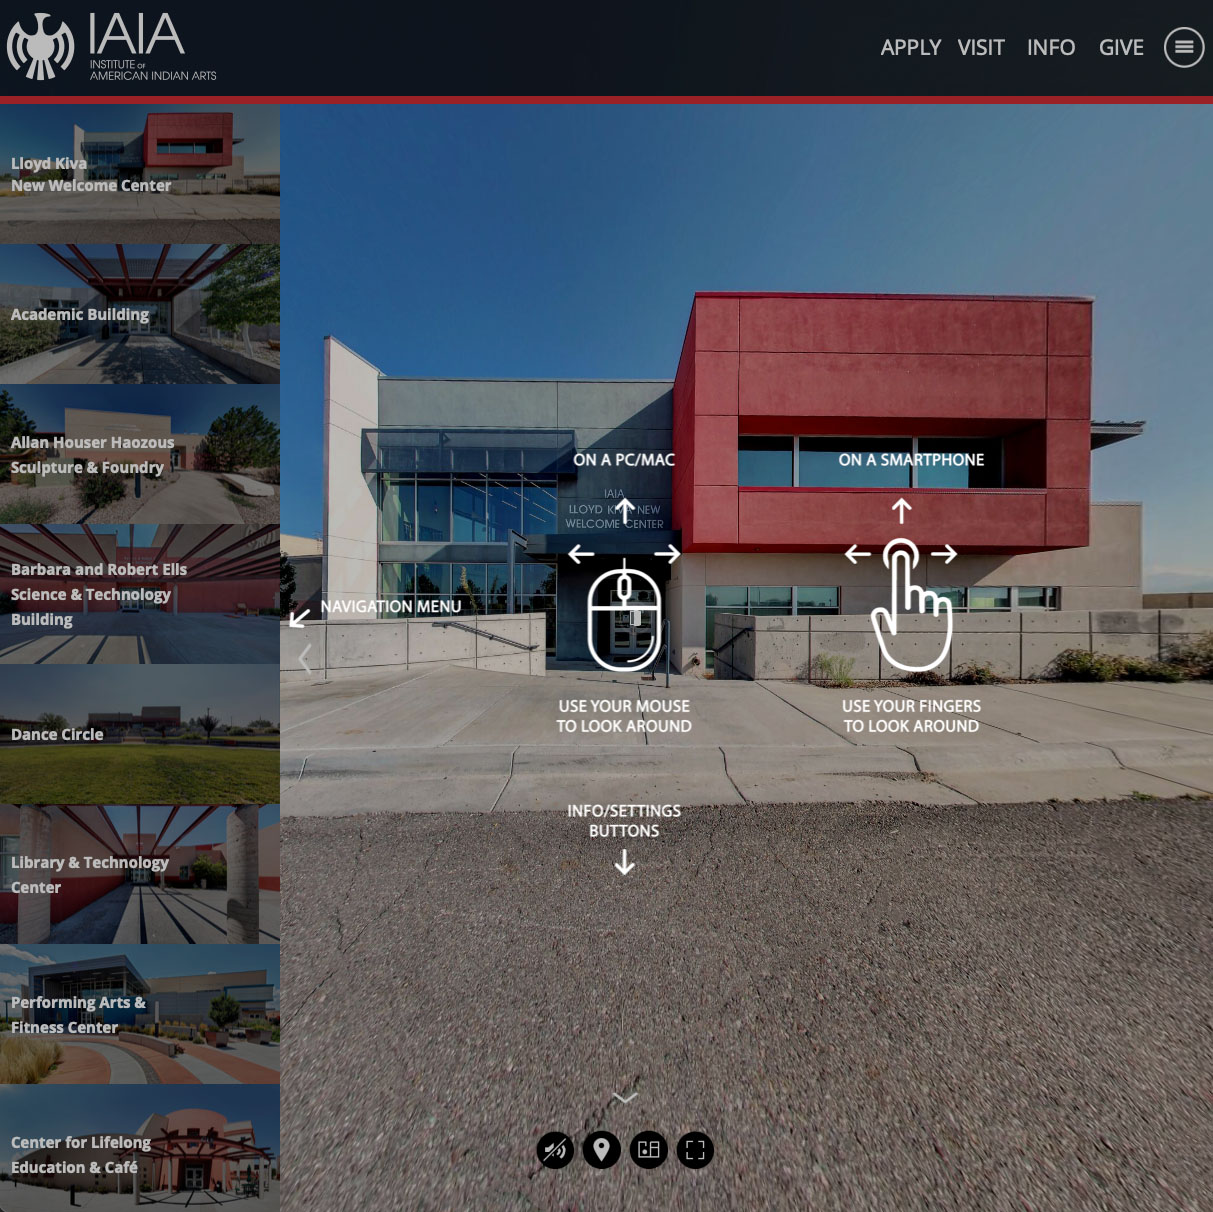 New Virtual Tour—Bringing the IAIA Campus to You